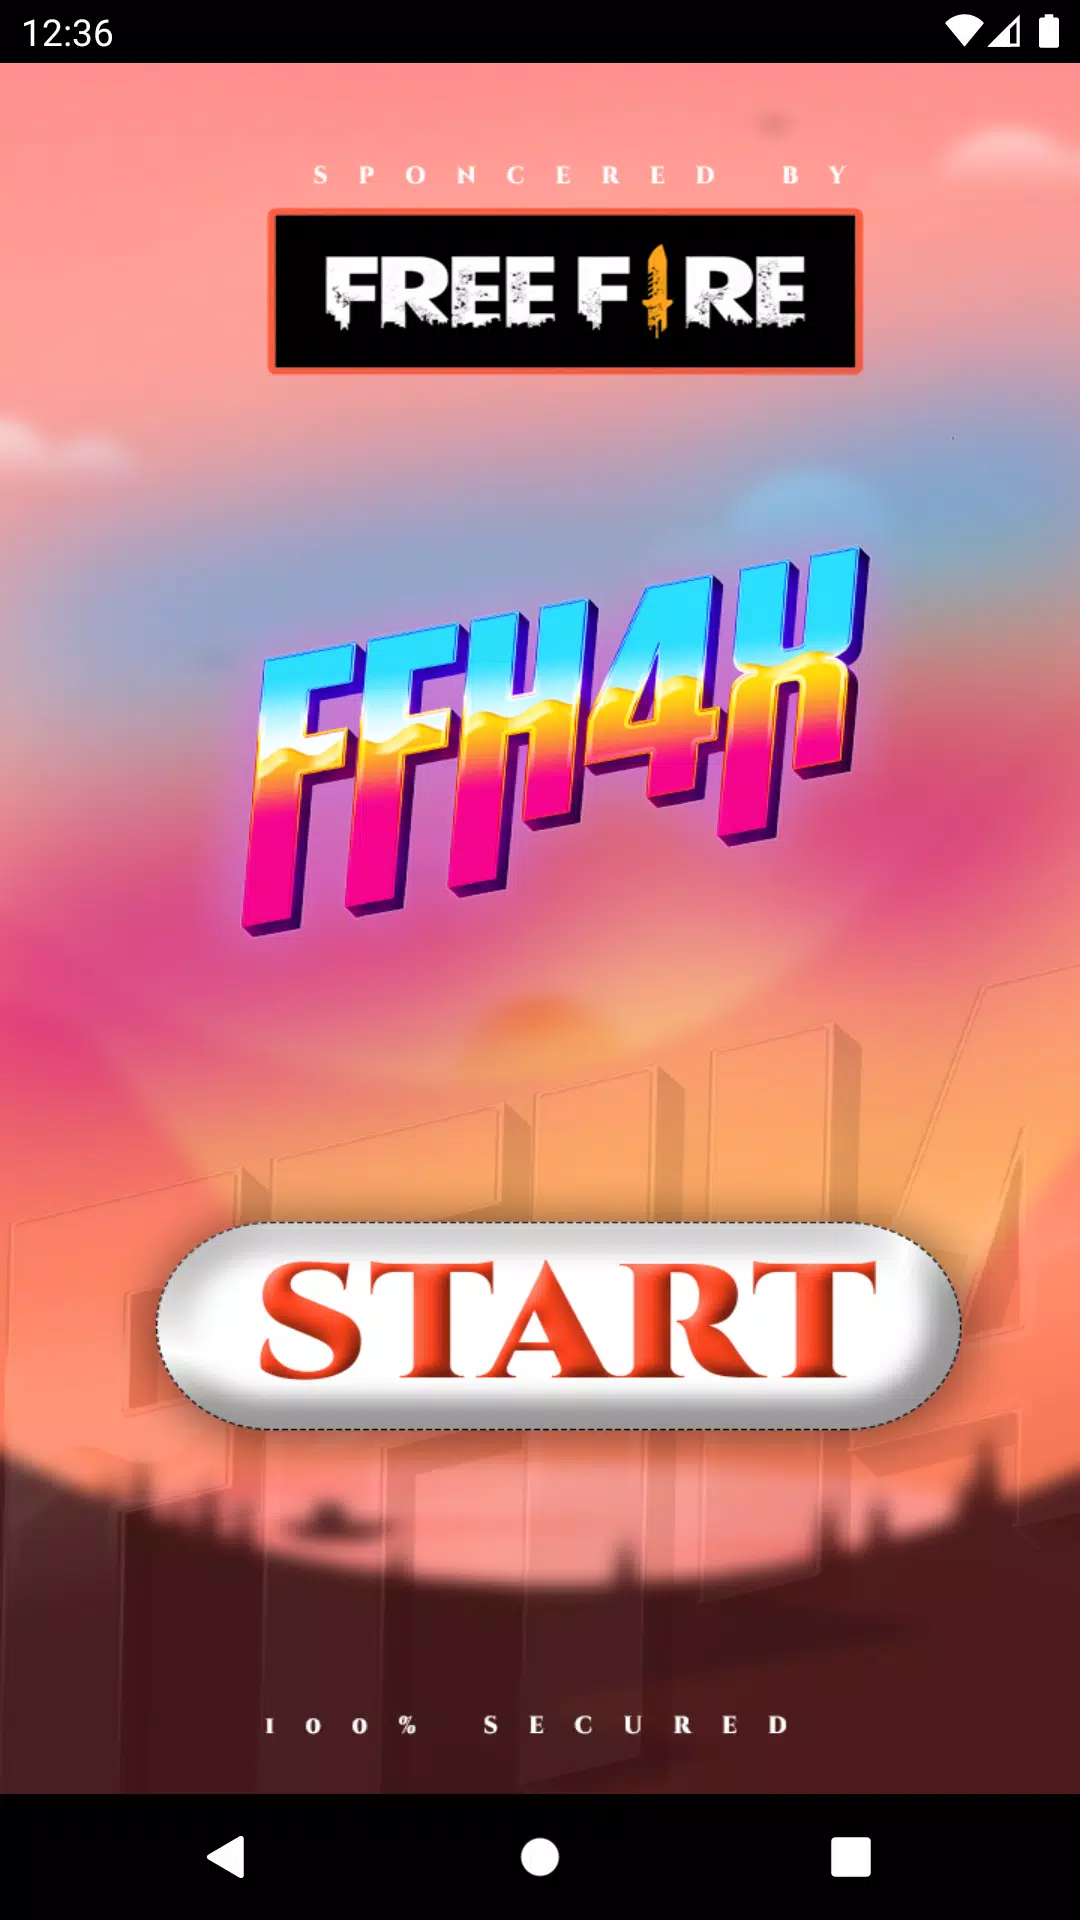 FFH4X DIAMOND: ffh4x MOD MENU APK (Android App) - Free Download